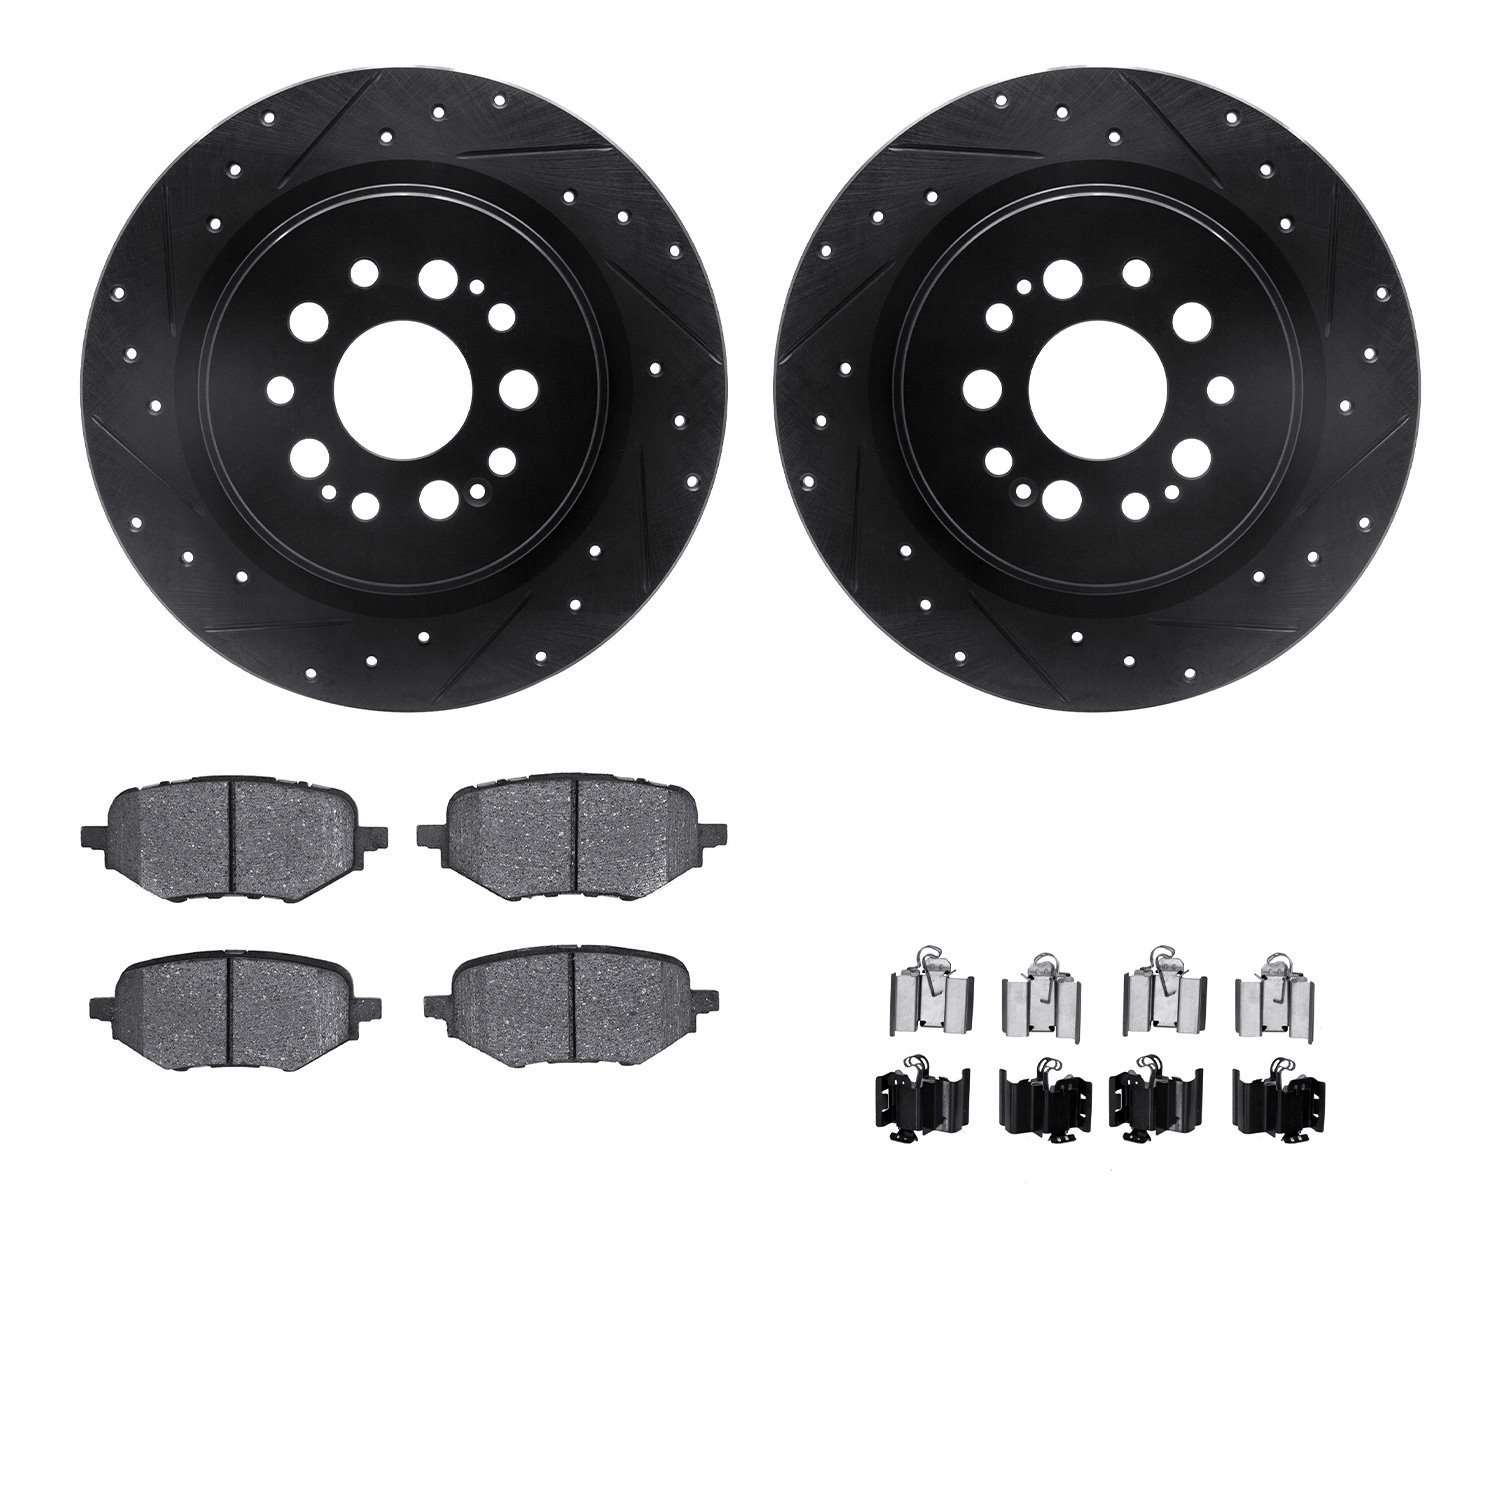 8312-59116 Drilled/Slotted Brake Rotors with 3000-Series Ceramic Brake Pads Kit & Hardware [Black], Fits Select Acura/Honda, Pos